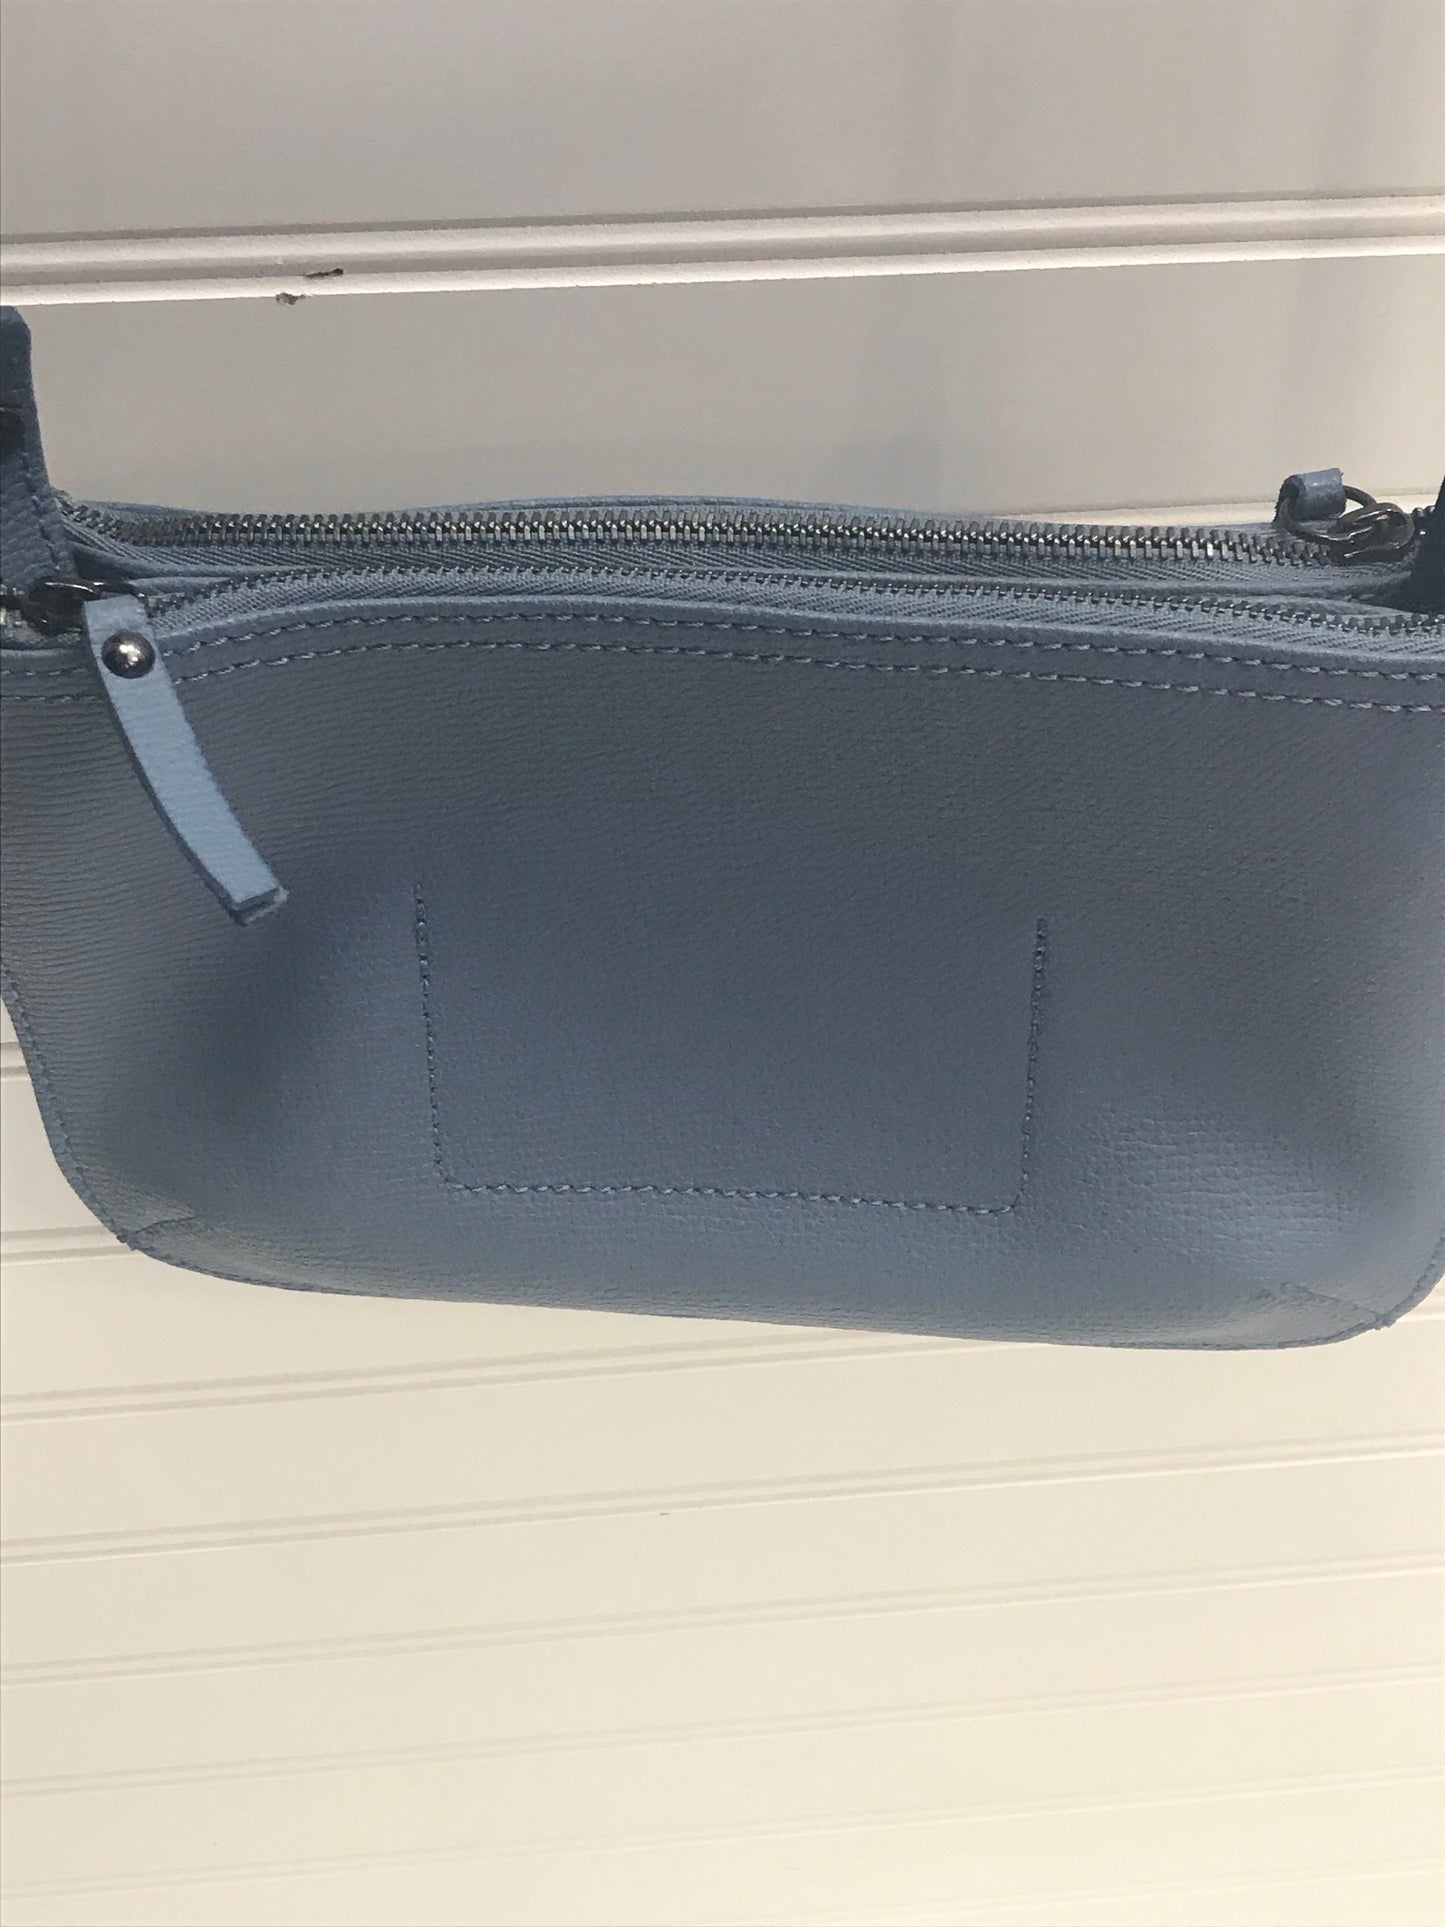 Handbag Designer By Longchamp  Size: Small